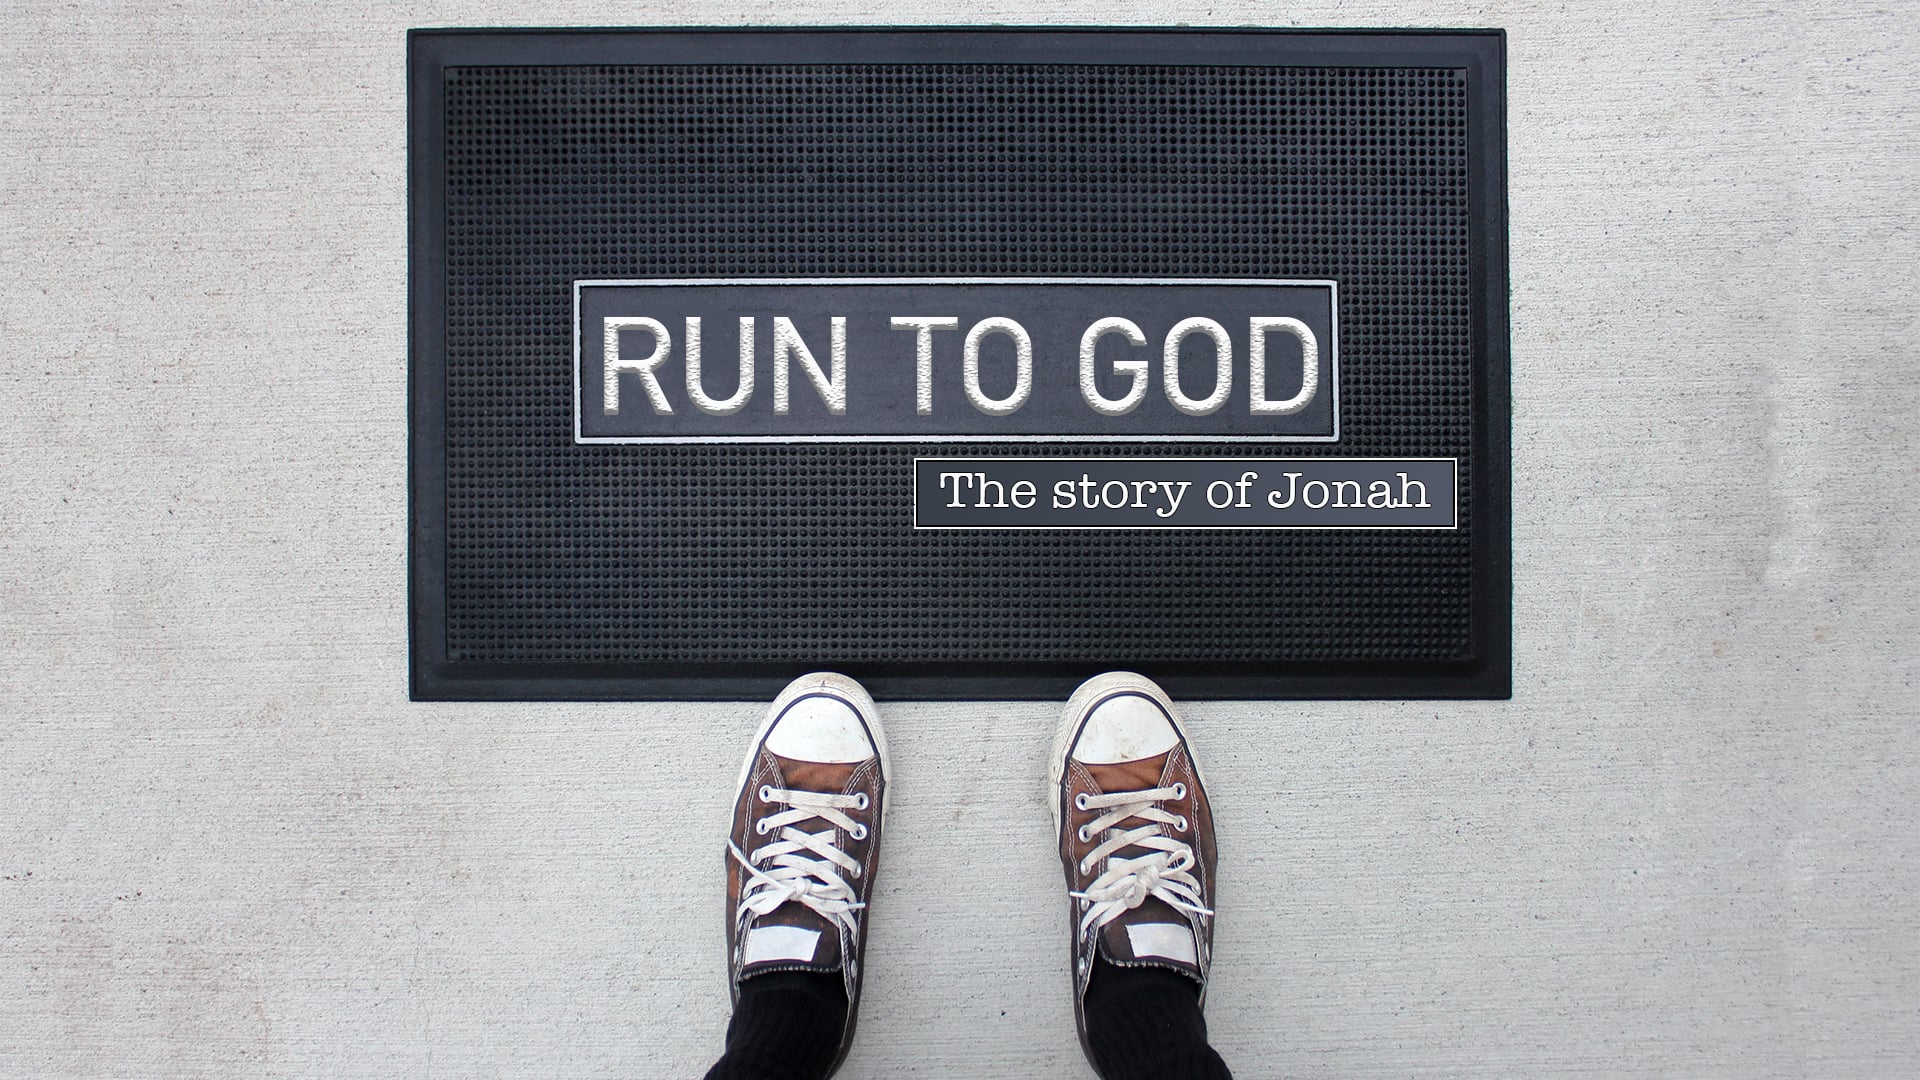 Run to God - Jonah's story